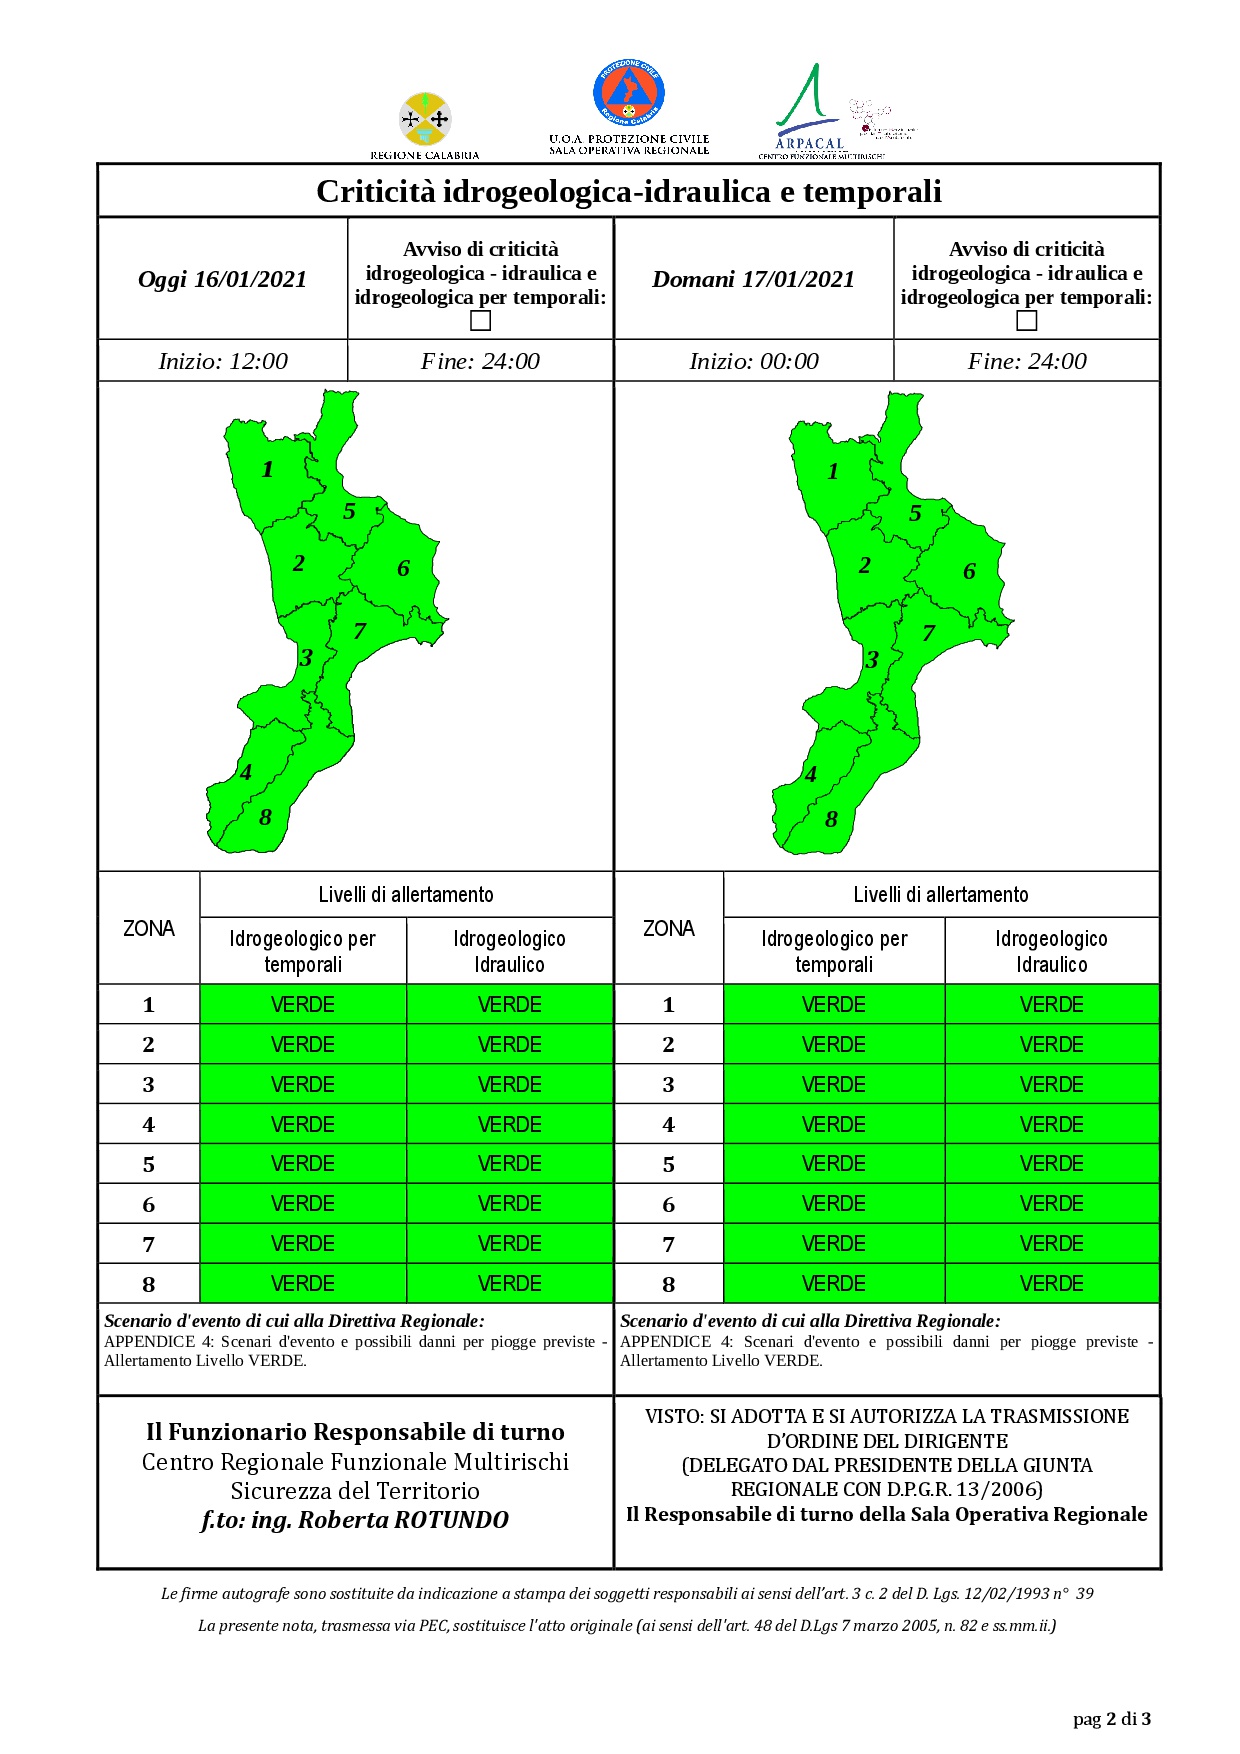 Criticità idrogeologica-idraulica e temporali in Calabria 16-01-2021